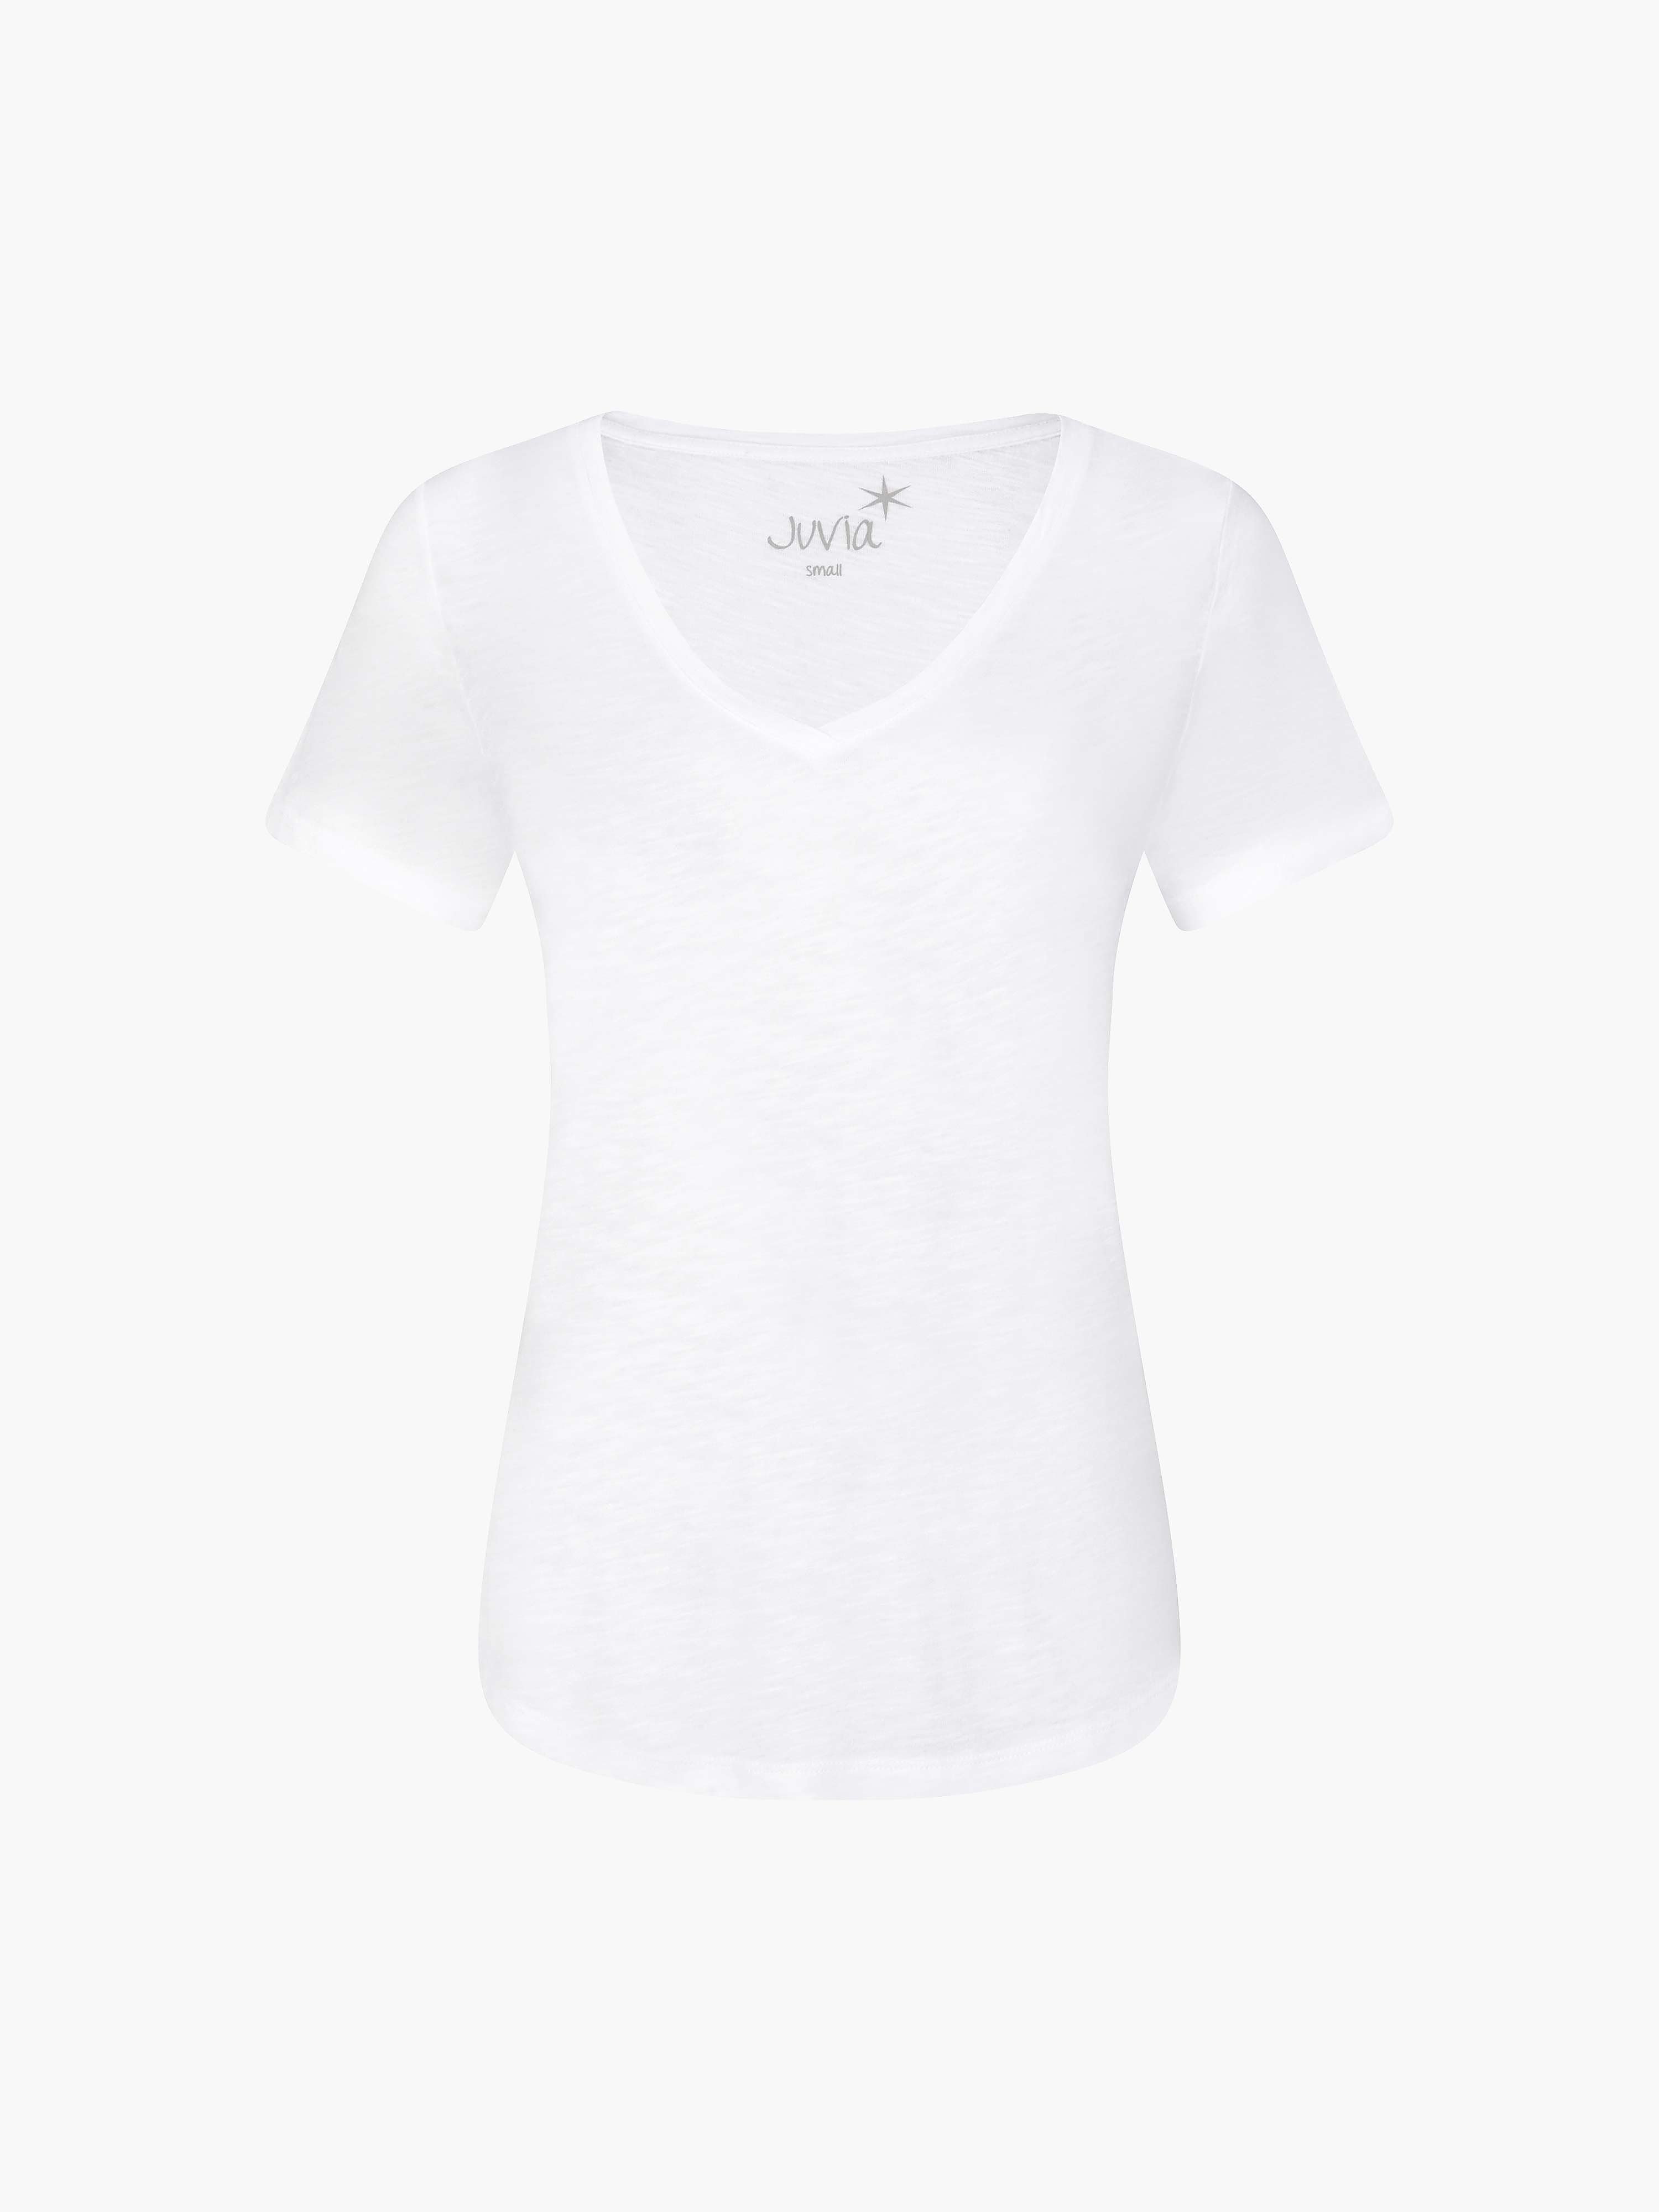 Le T-shirt manches courtes  Juvia blanc taille 42